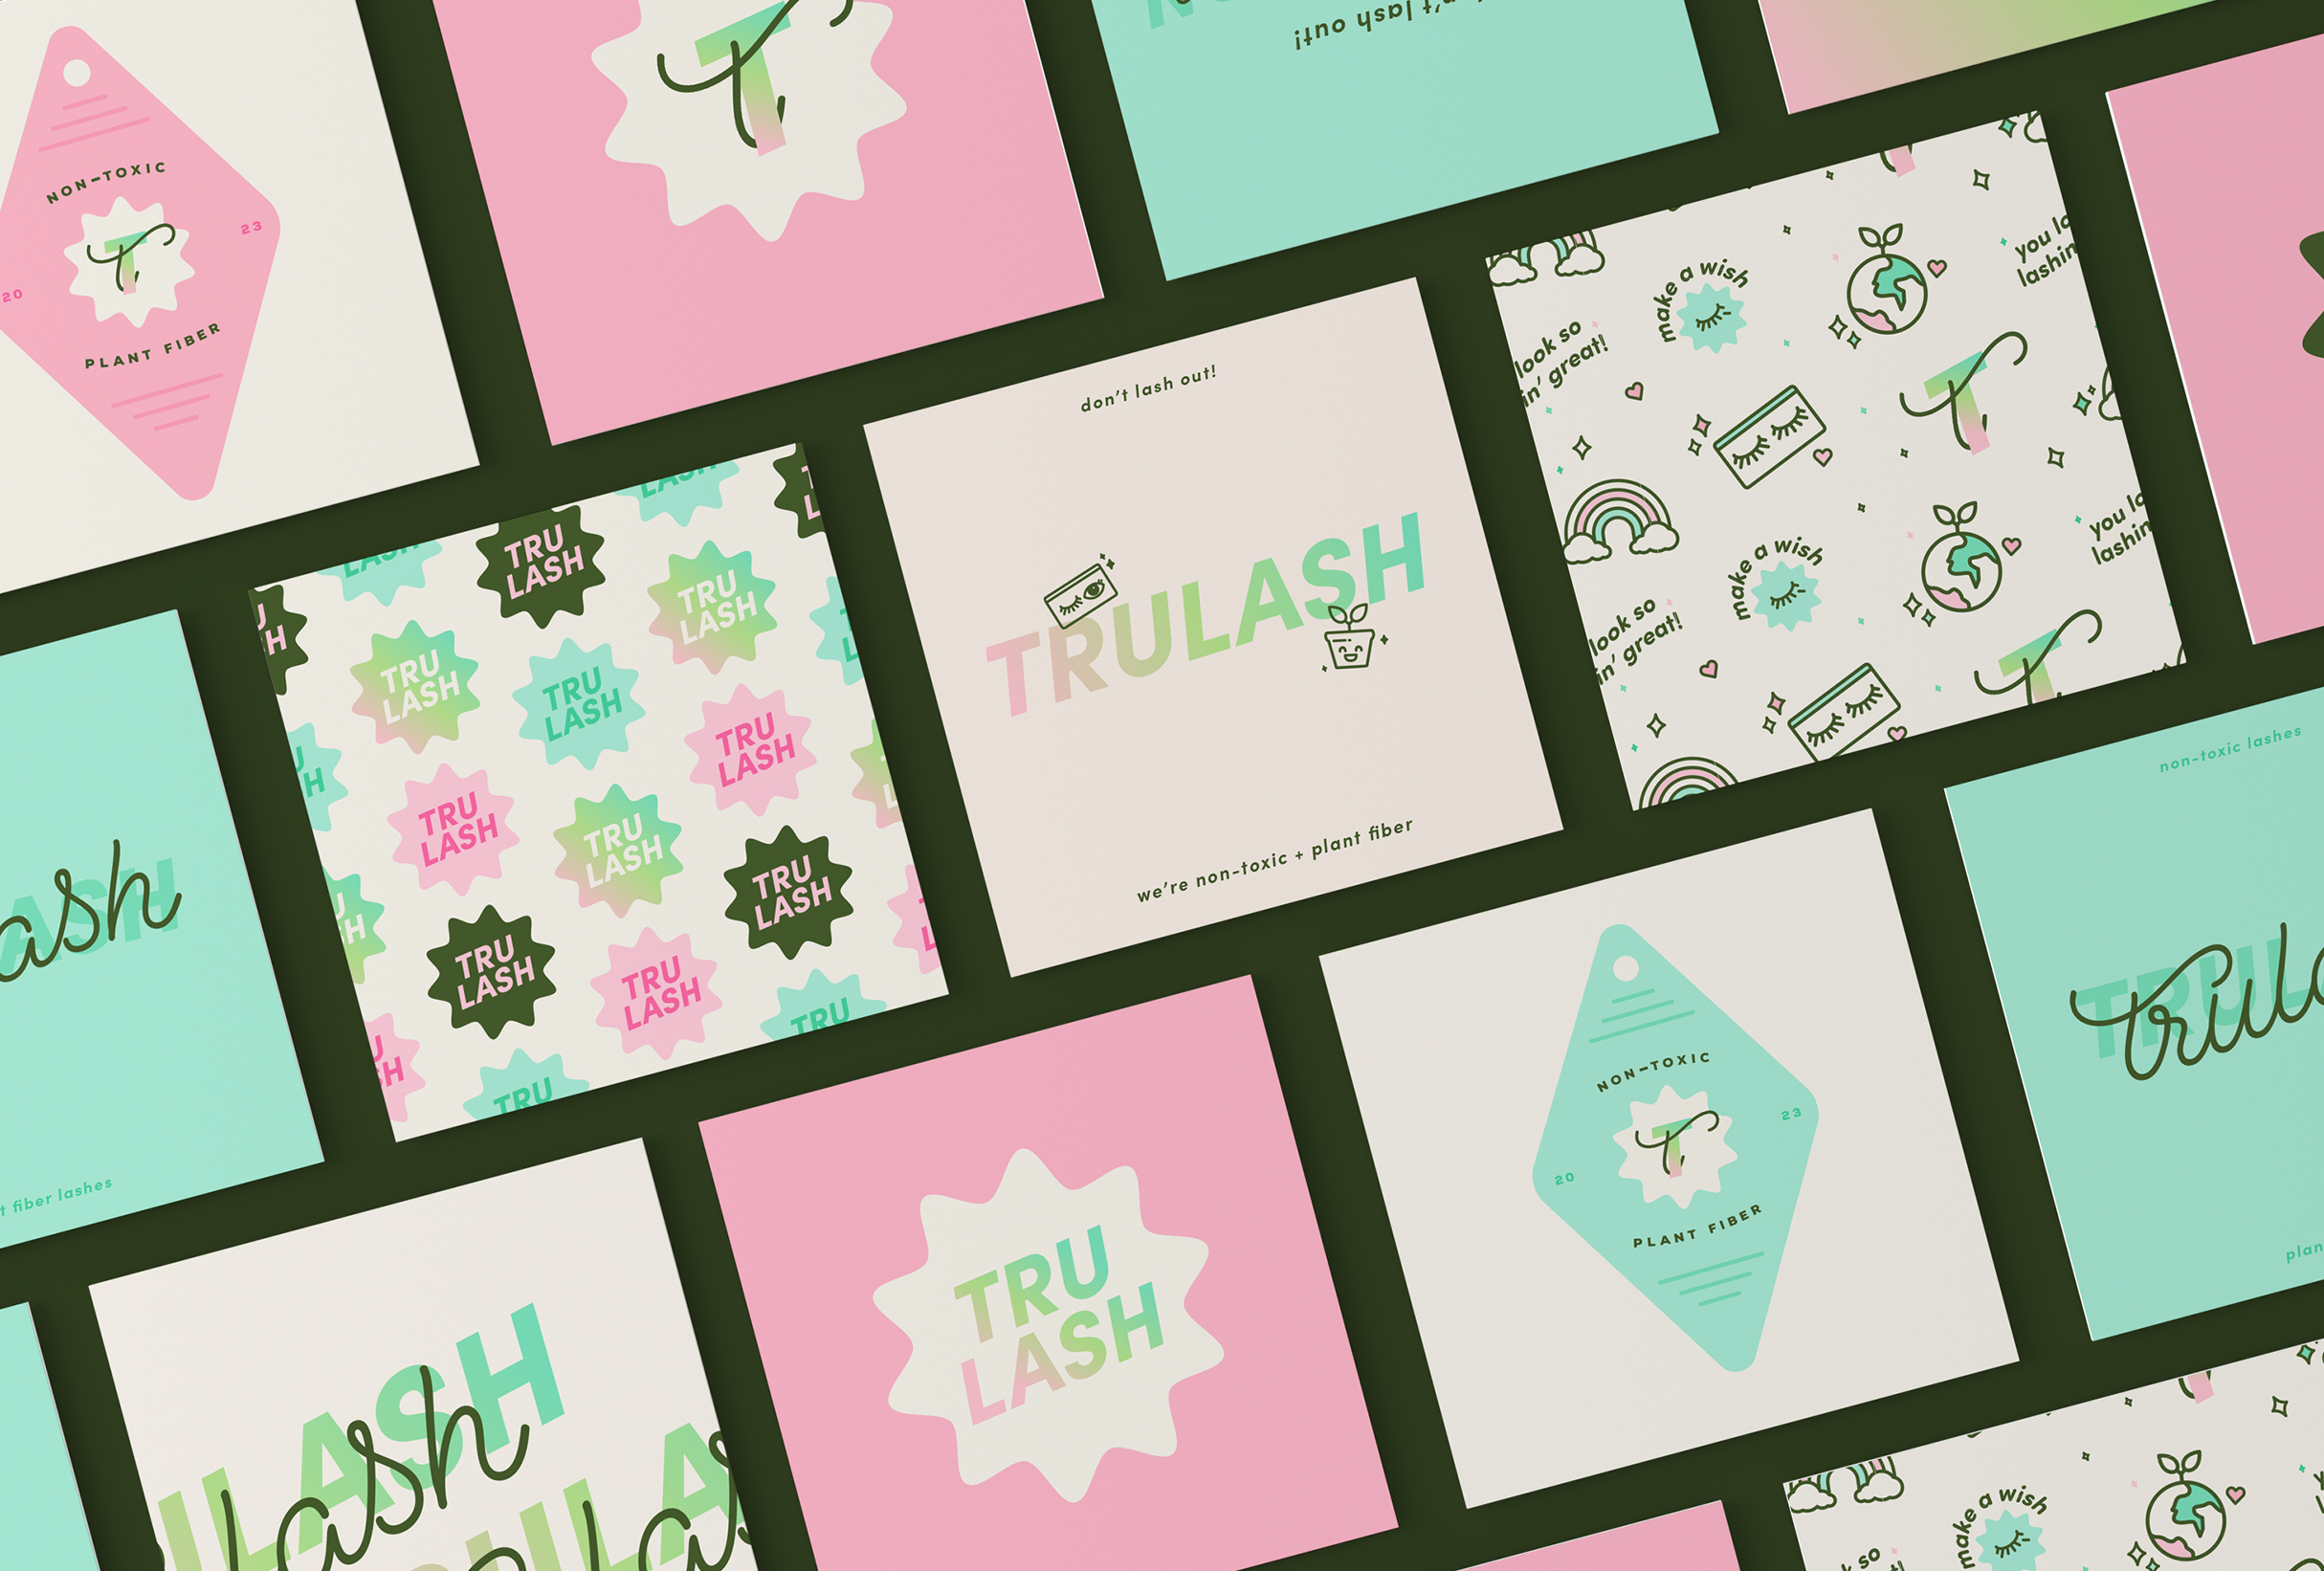 Lettermarks for Trulash, non-toxic plant fiber lashes - designed by Kaye Huett, Wiltshire-based graphic designer